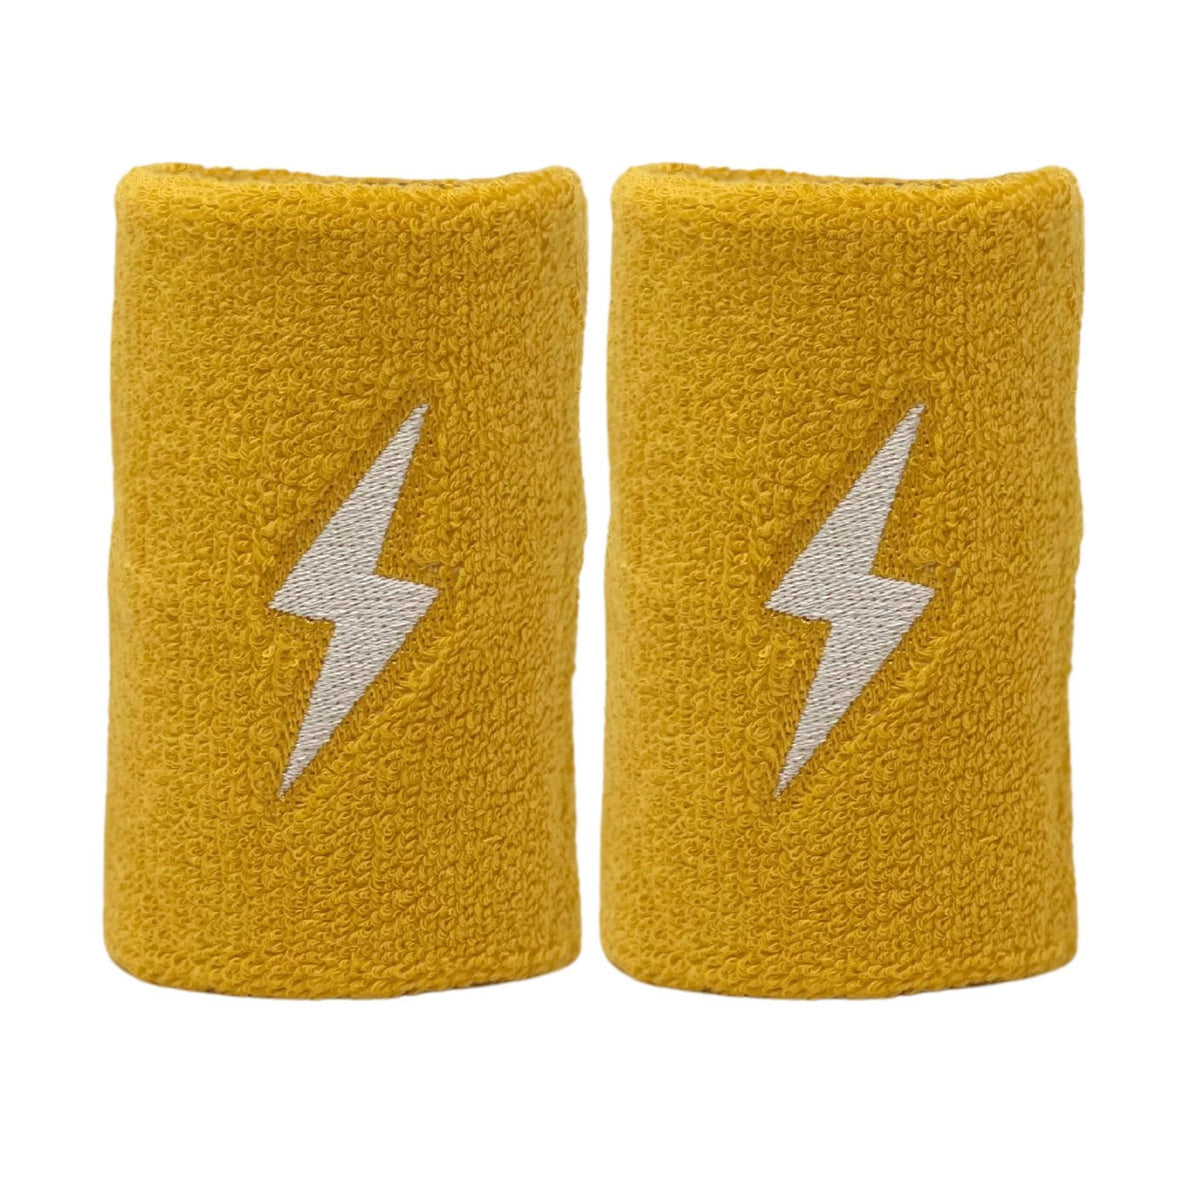 yellow-sweatbands-yellow-wristbands-baseball-accessories-bruce-bolt